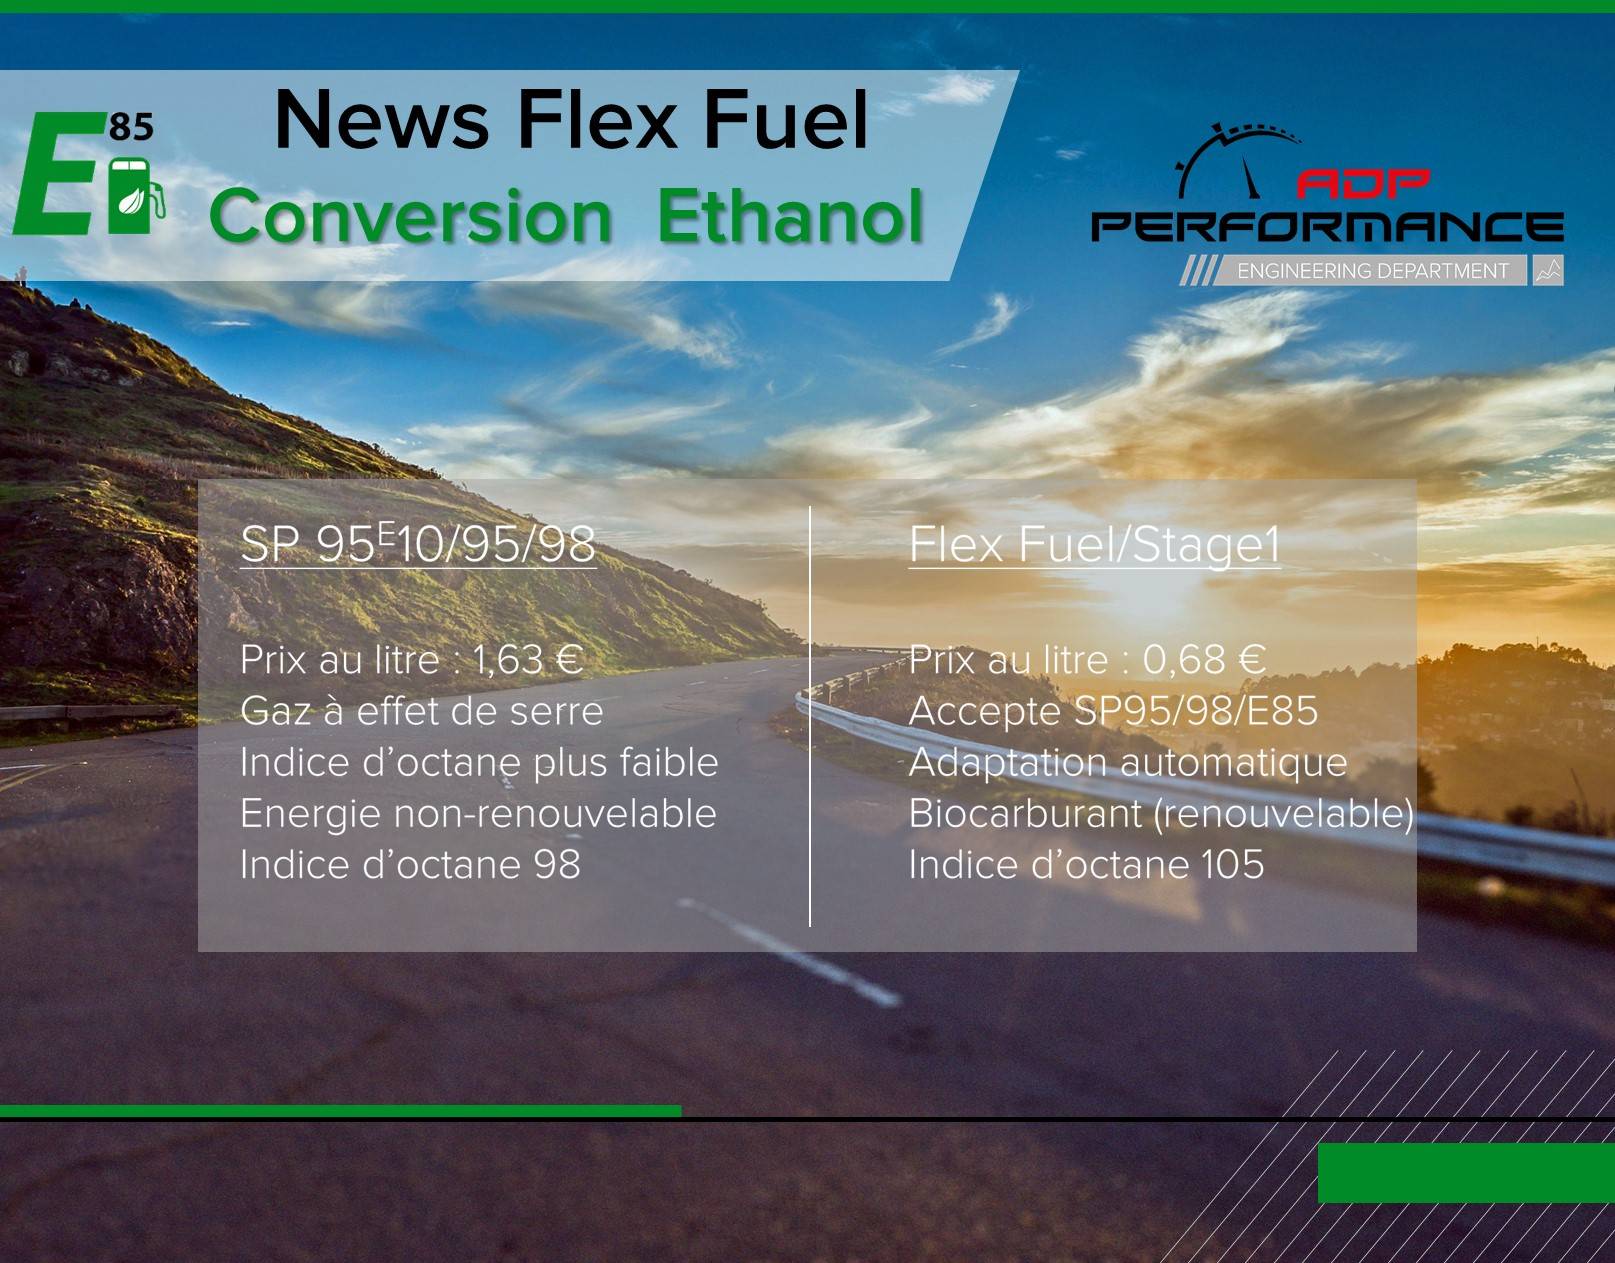 Conversion bio ethanol e85 salon de provence